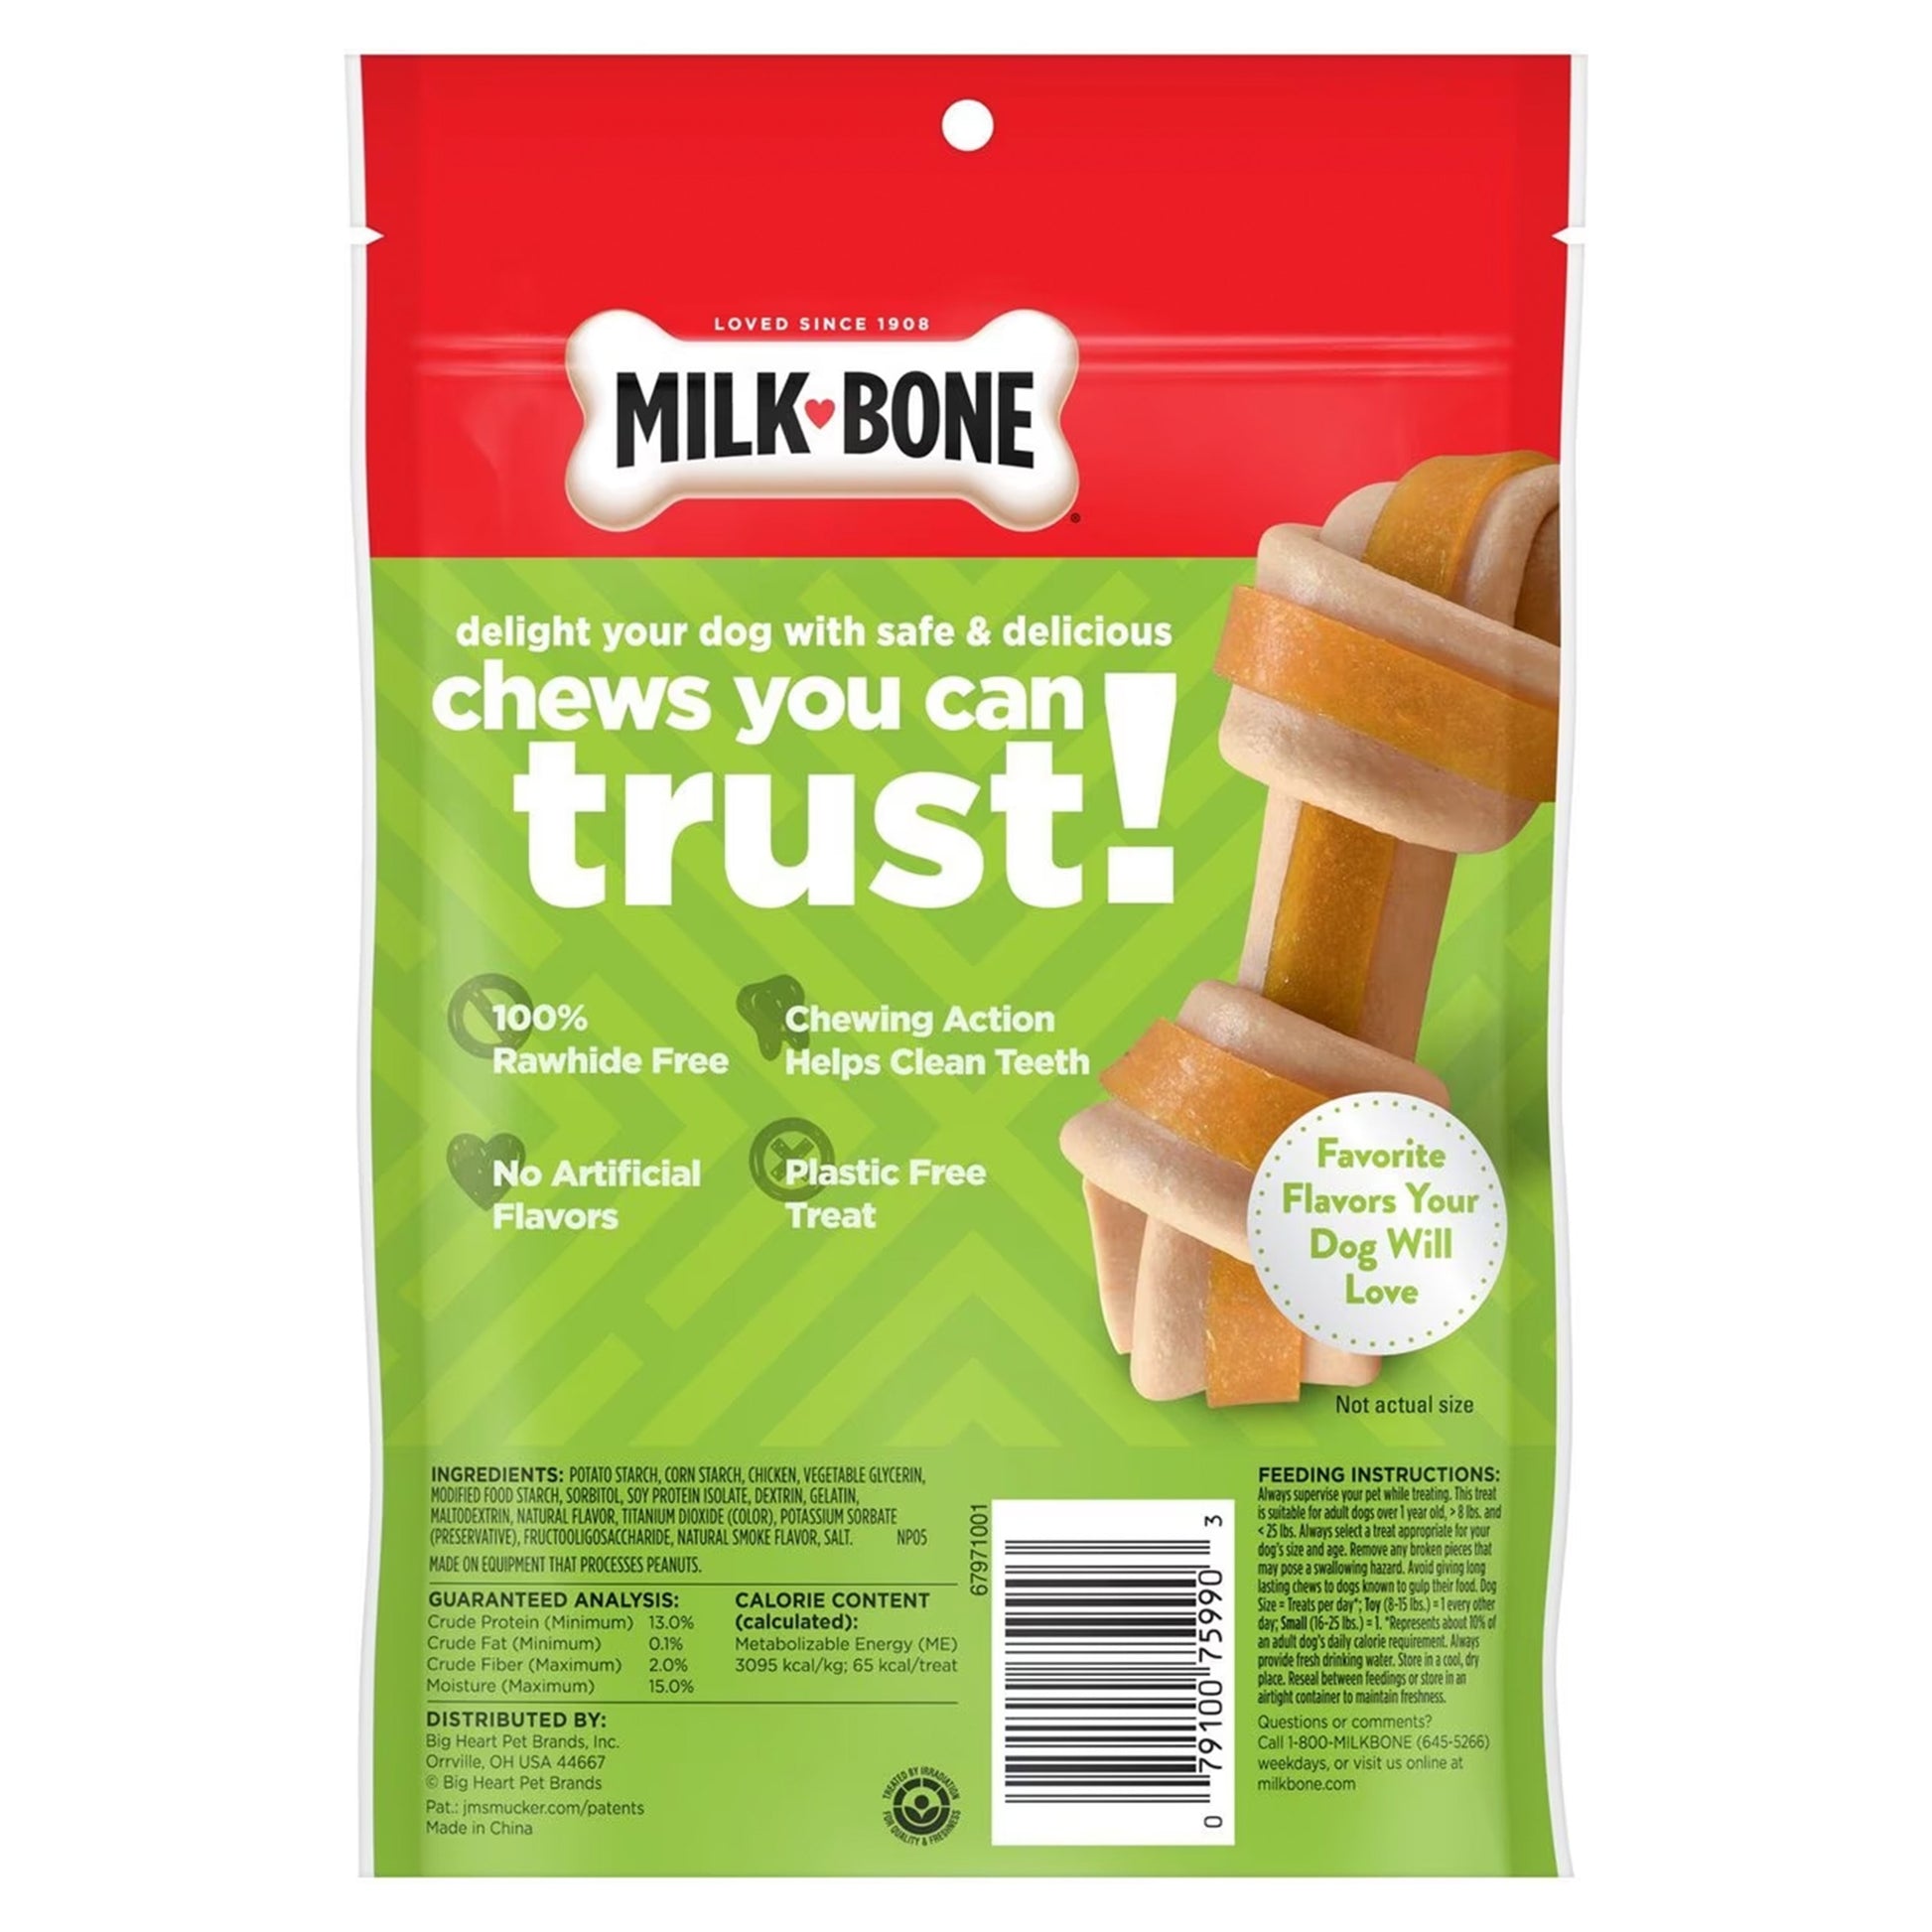 Milk-Bone Gnaw Bones Mini Chicken Flavored Bone Dog Treats 5.1oz - Kwik Pets